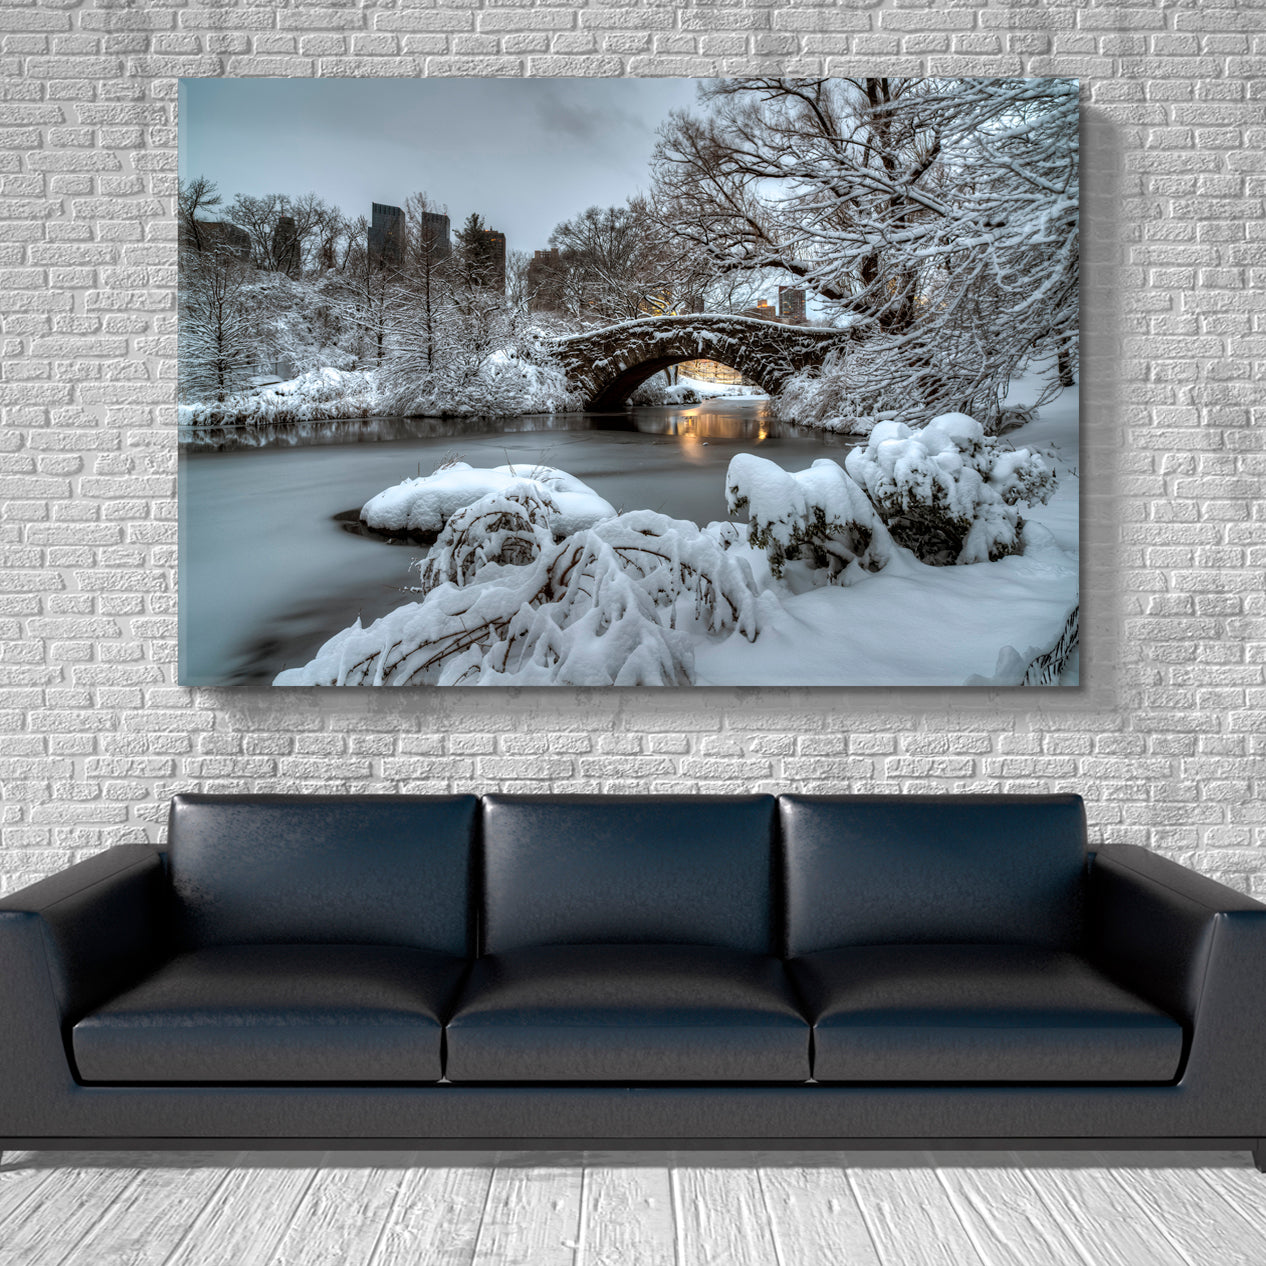 Central Park New York City Gapstow Bridge Winter Snow Storm Scenery Landscape Fine Art Print Artesty 1 panel 24" x 16" 